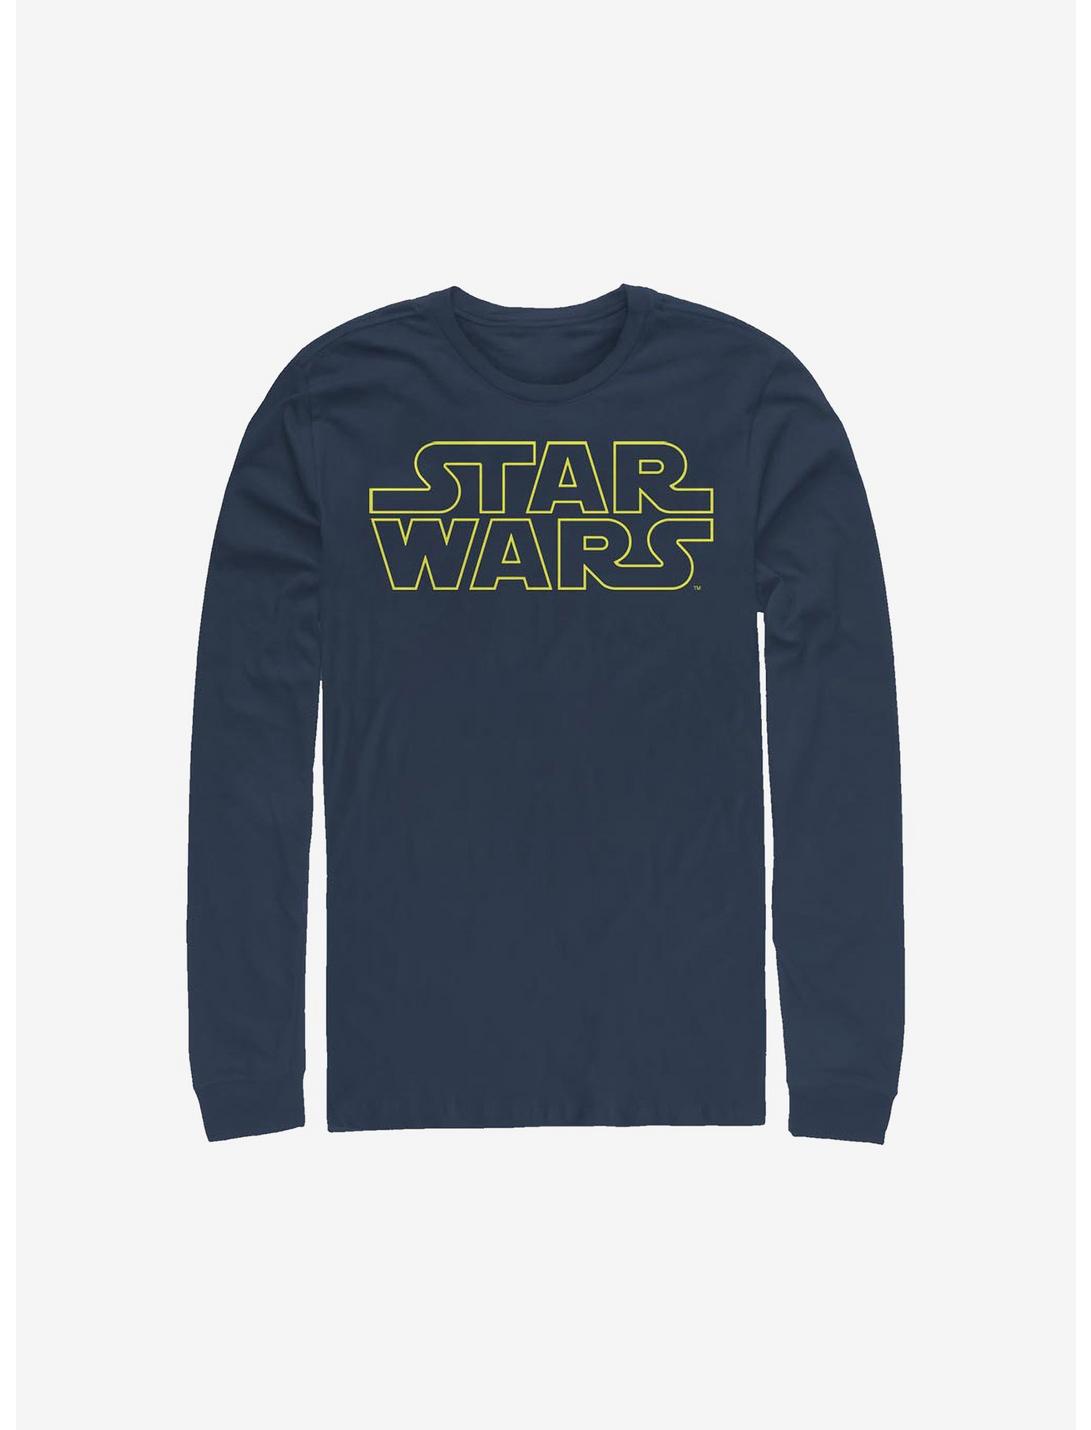 Star Wars Simplified Long-Sleeve T-Shirt, NAVY, hi-res